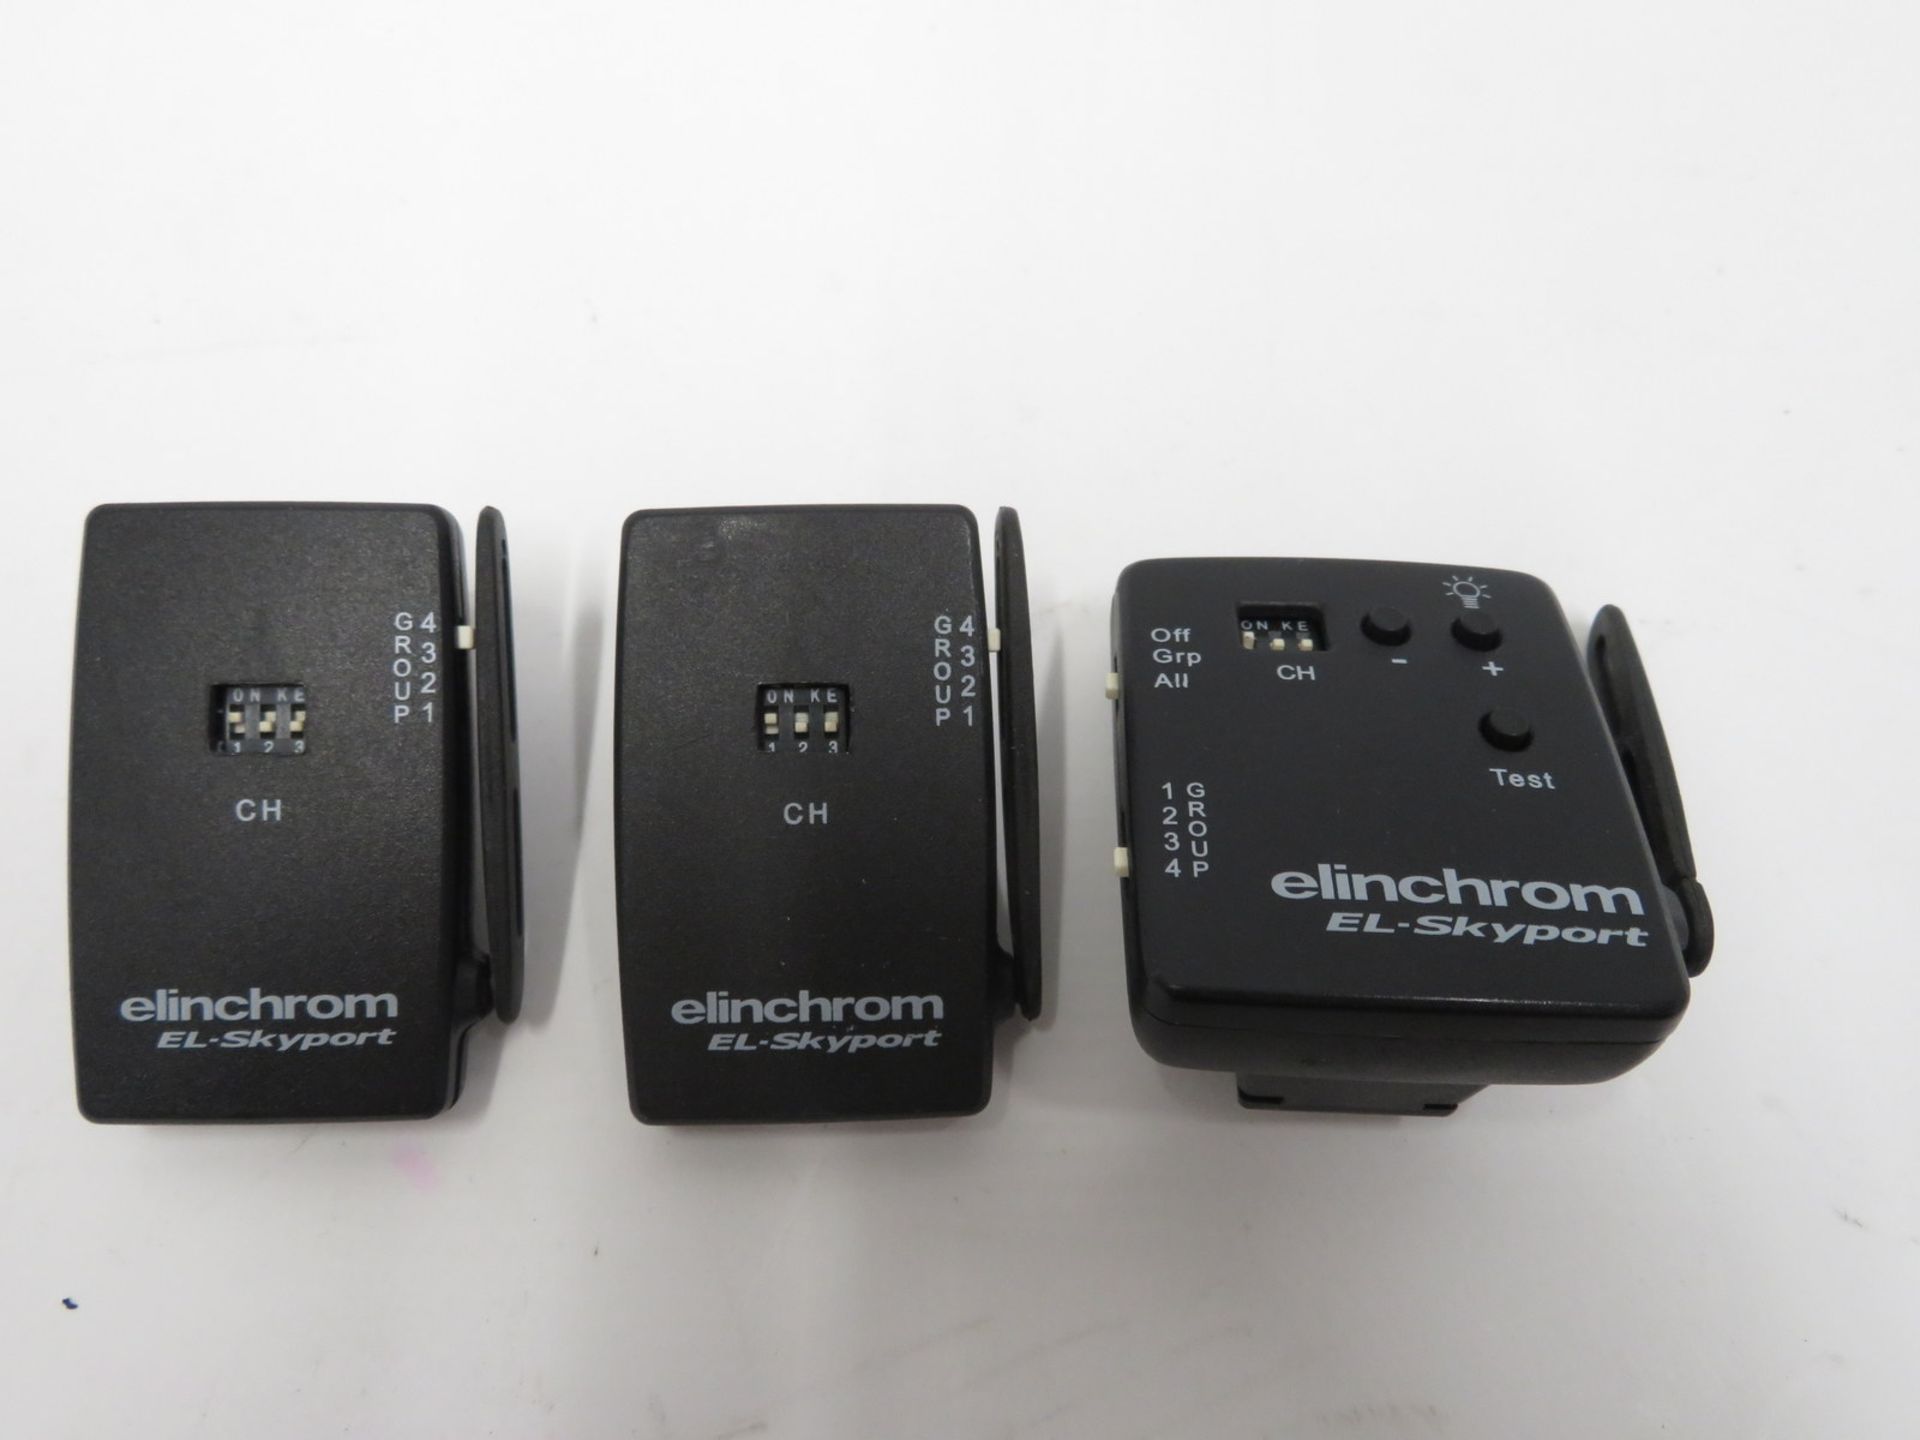 Elinchrom EL-Skyport trigger / receiever set (2 receivers and 1 trigger)